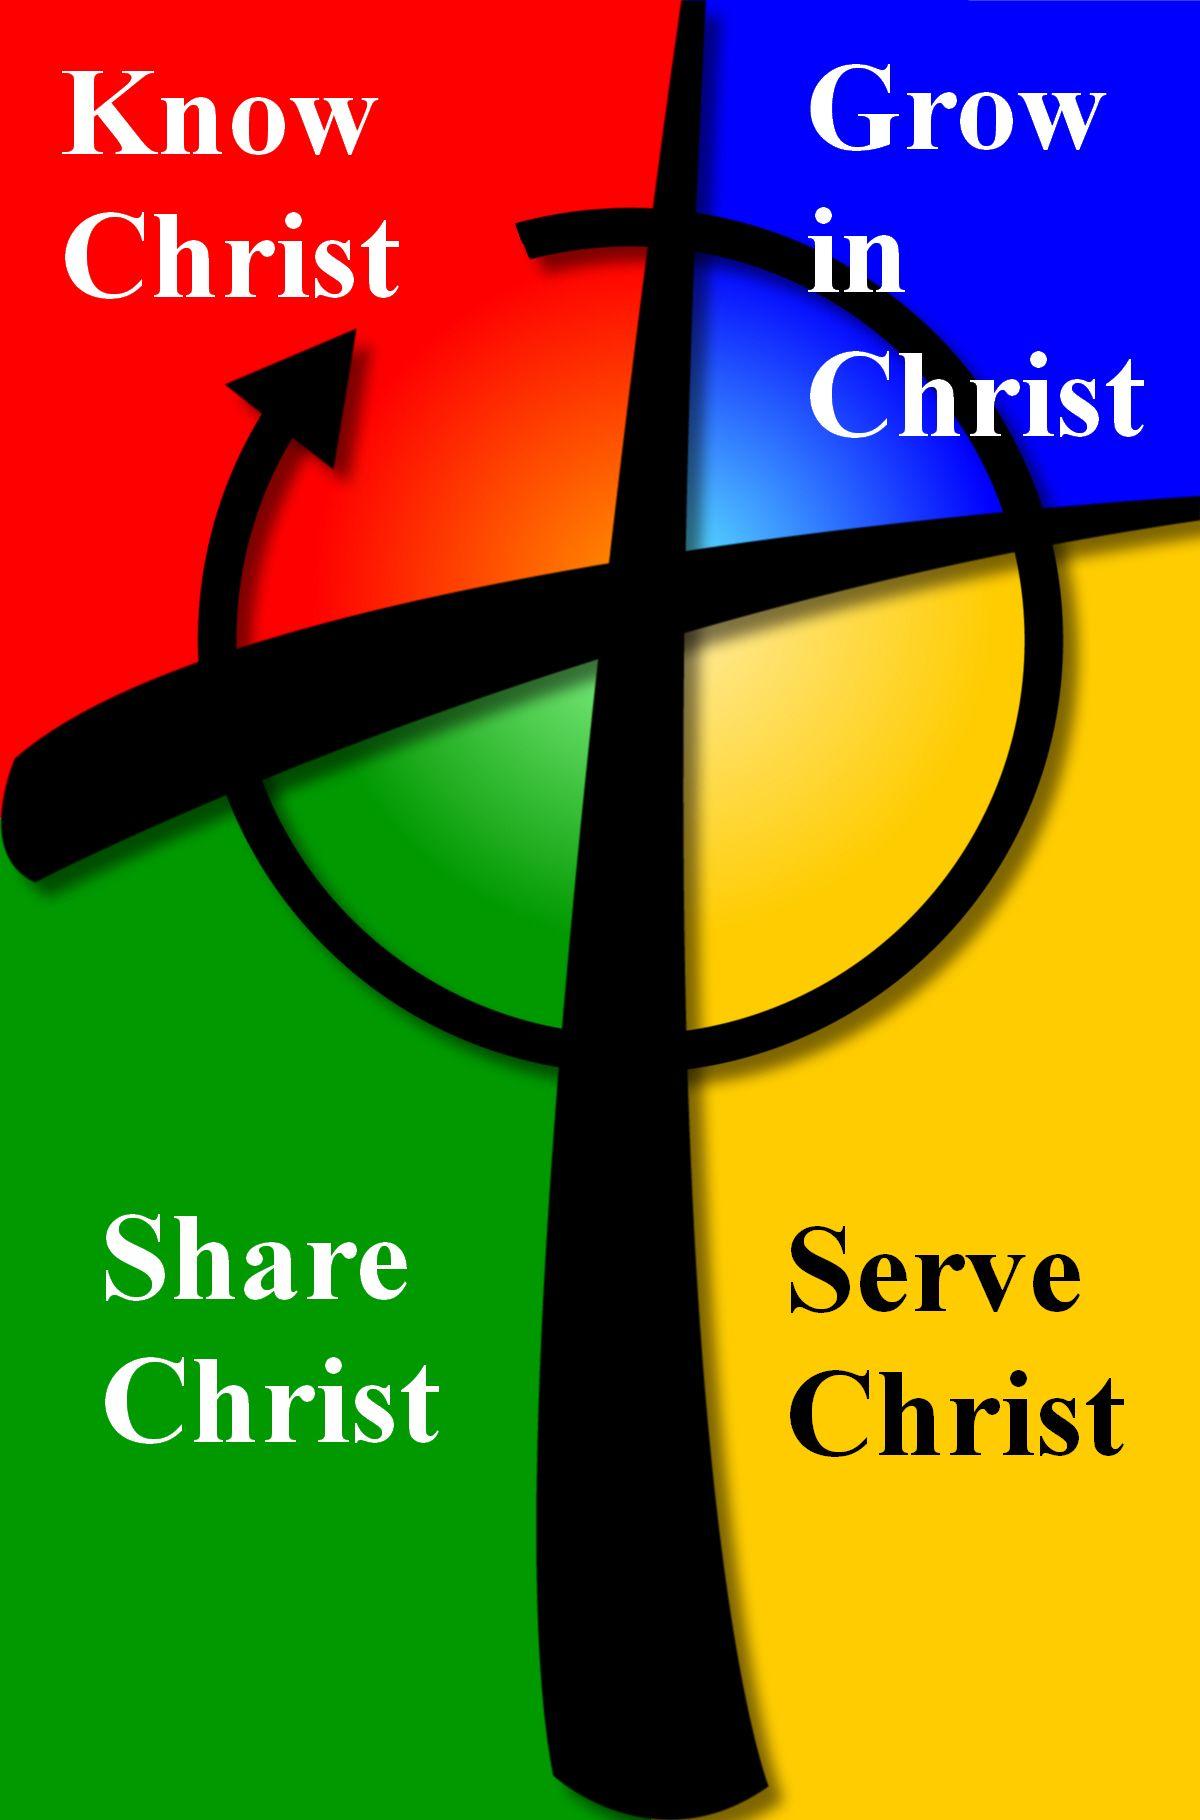 Discipleship Logo - Simple Discipleship logo words. Sermon Series Idea